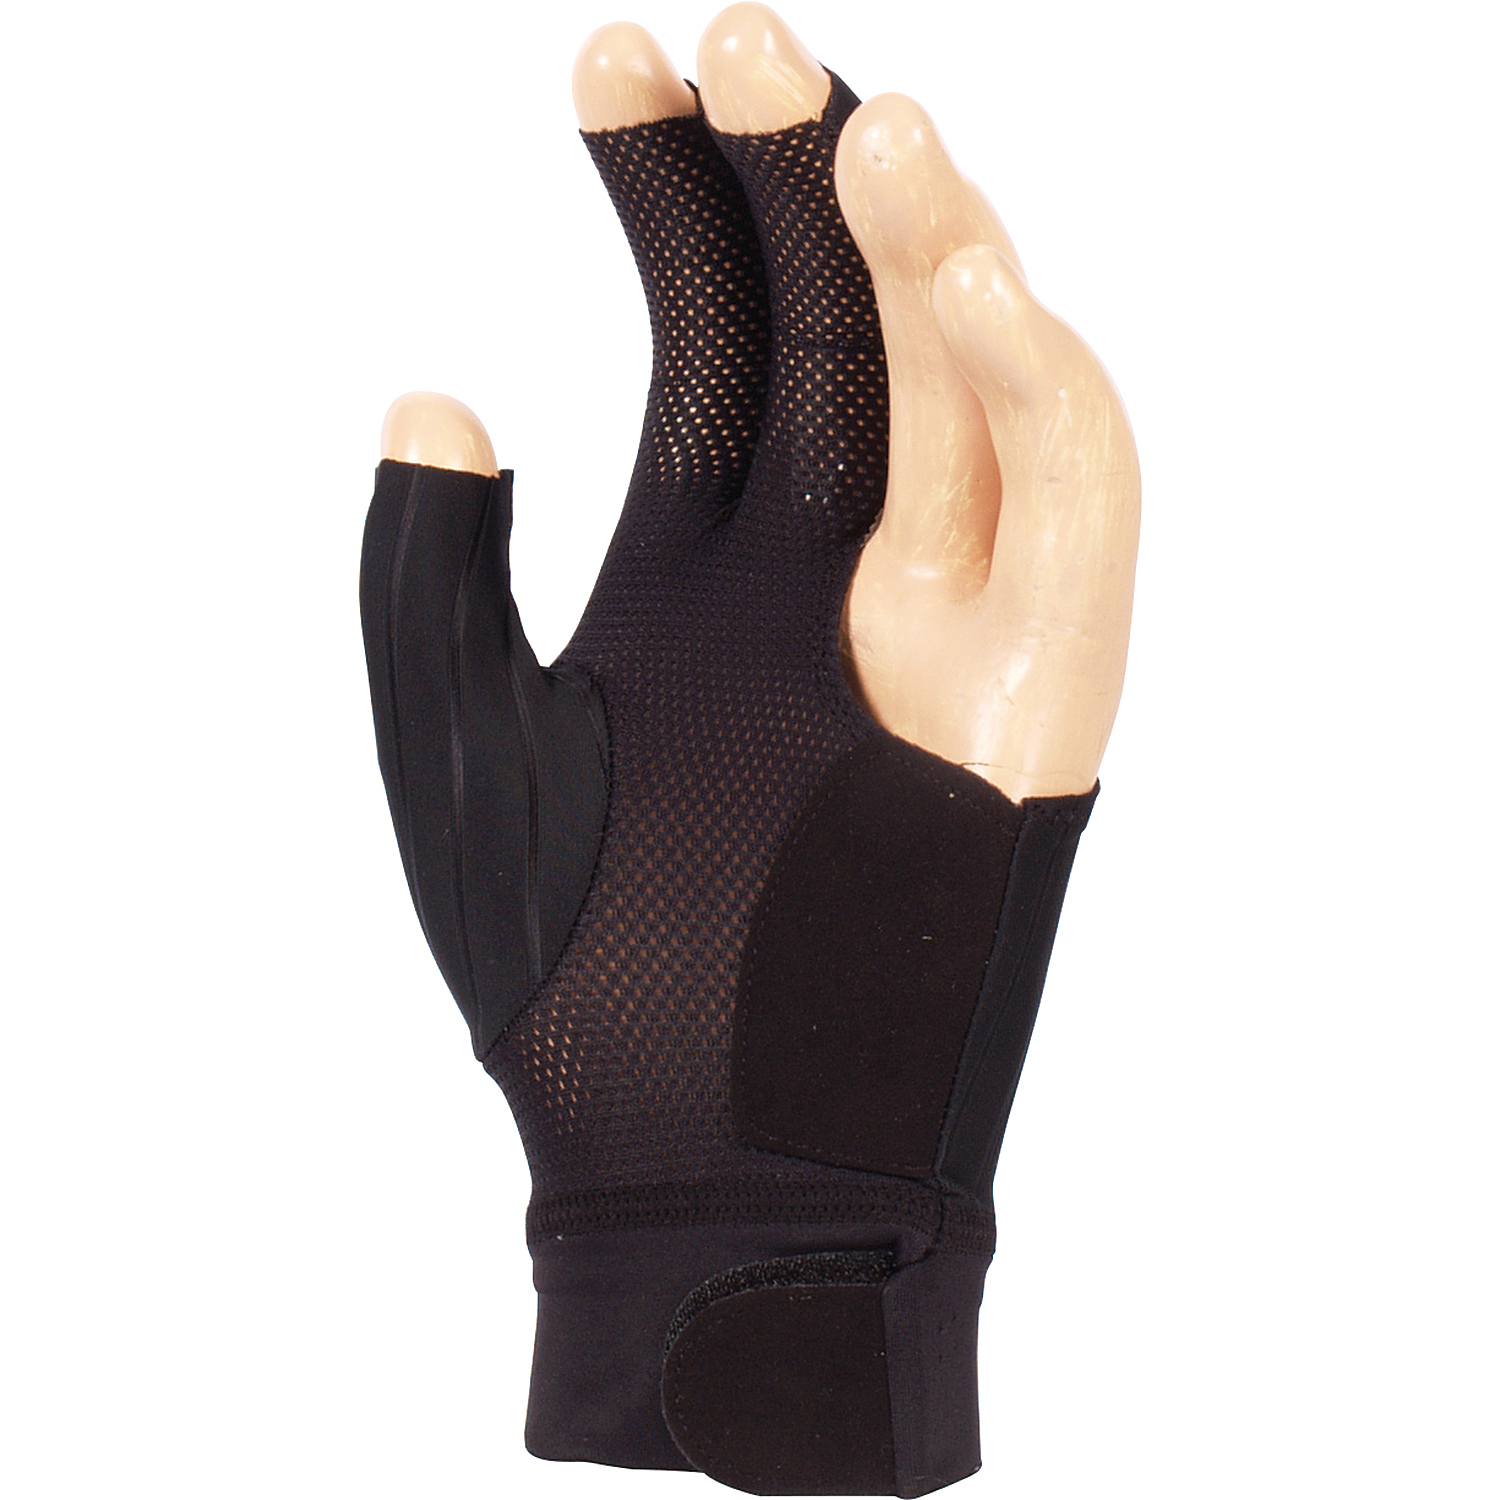 KA0280-AD: Biljart handschoen Adam Pro zwart large/medium